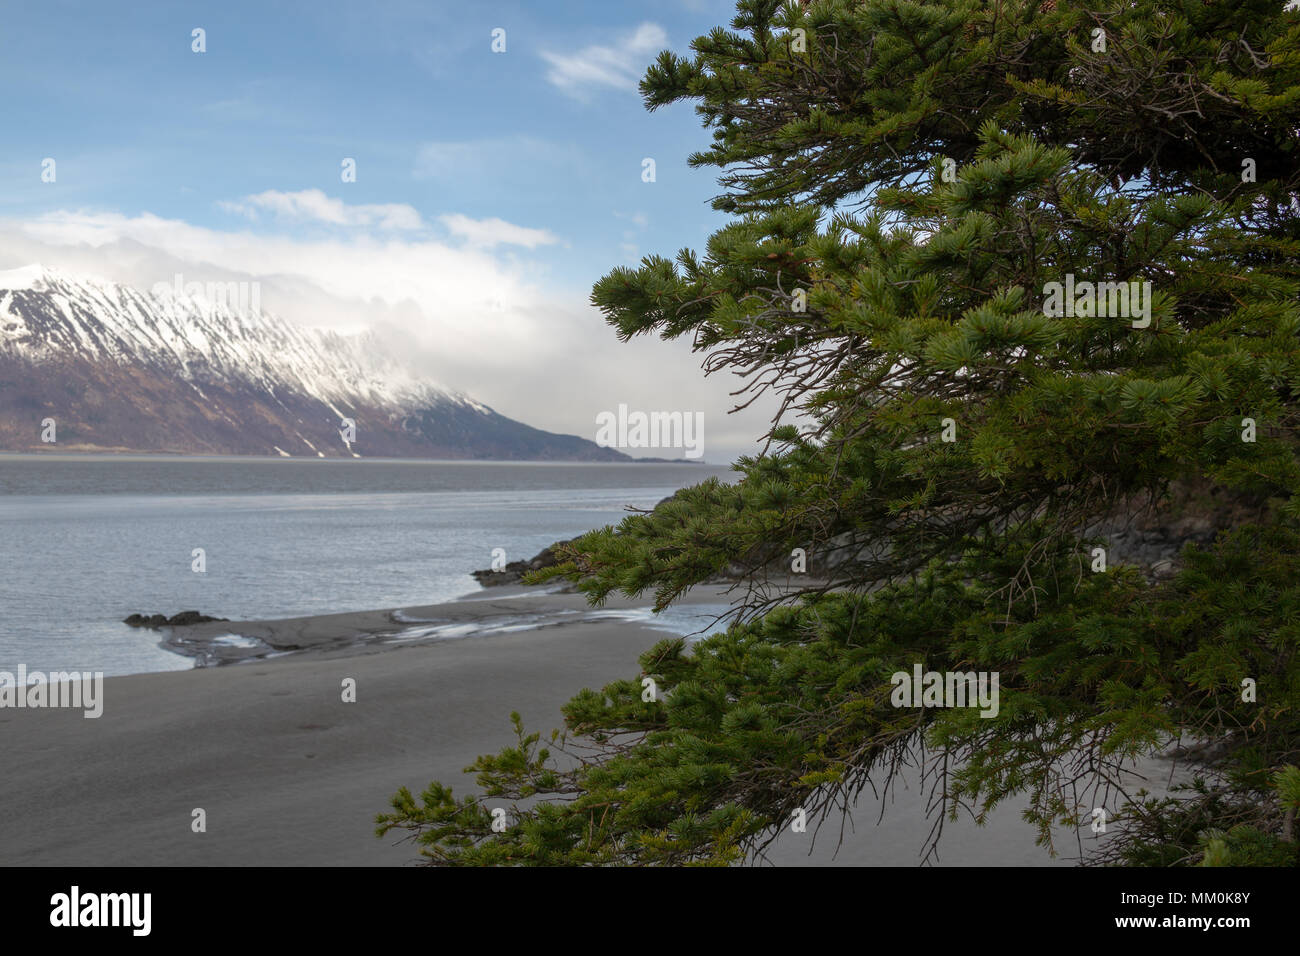 Turnagain Arm, Tidal Flats, Trees, Mountains and Water. Near Hope, Alaska. Rocky Shoreline. Snow capped Chugach Mountains. Kenai Peninsula Windy Point Stock Photo